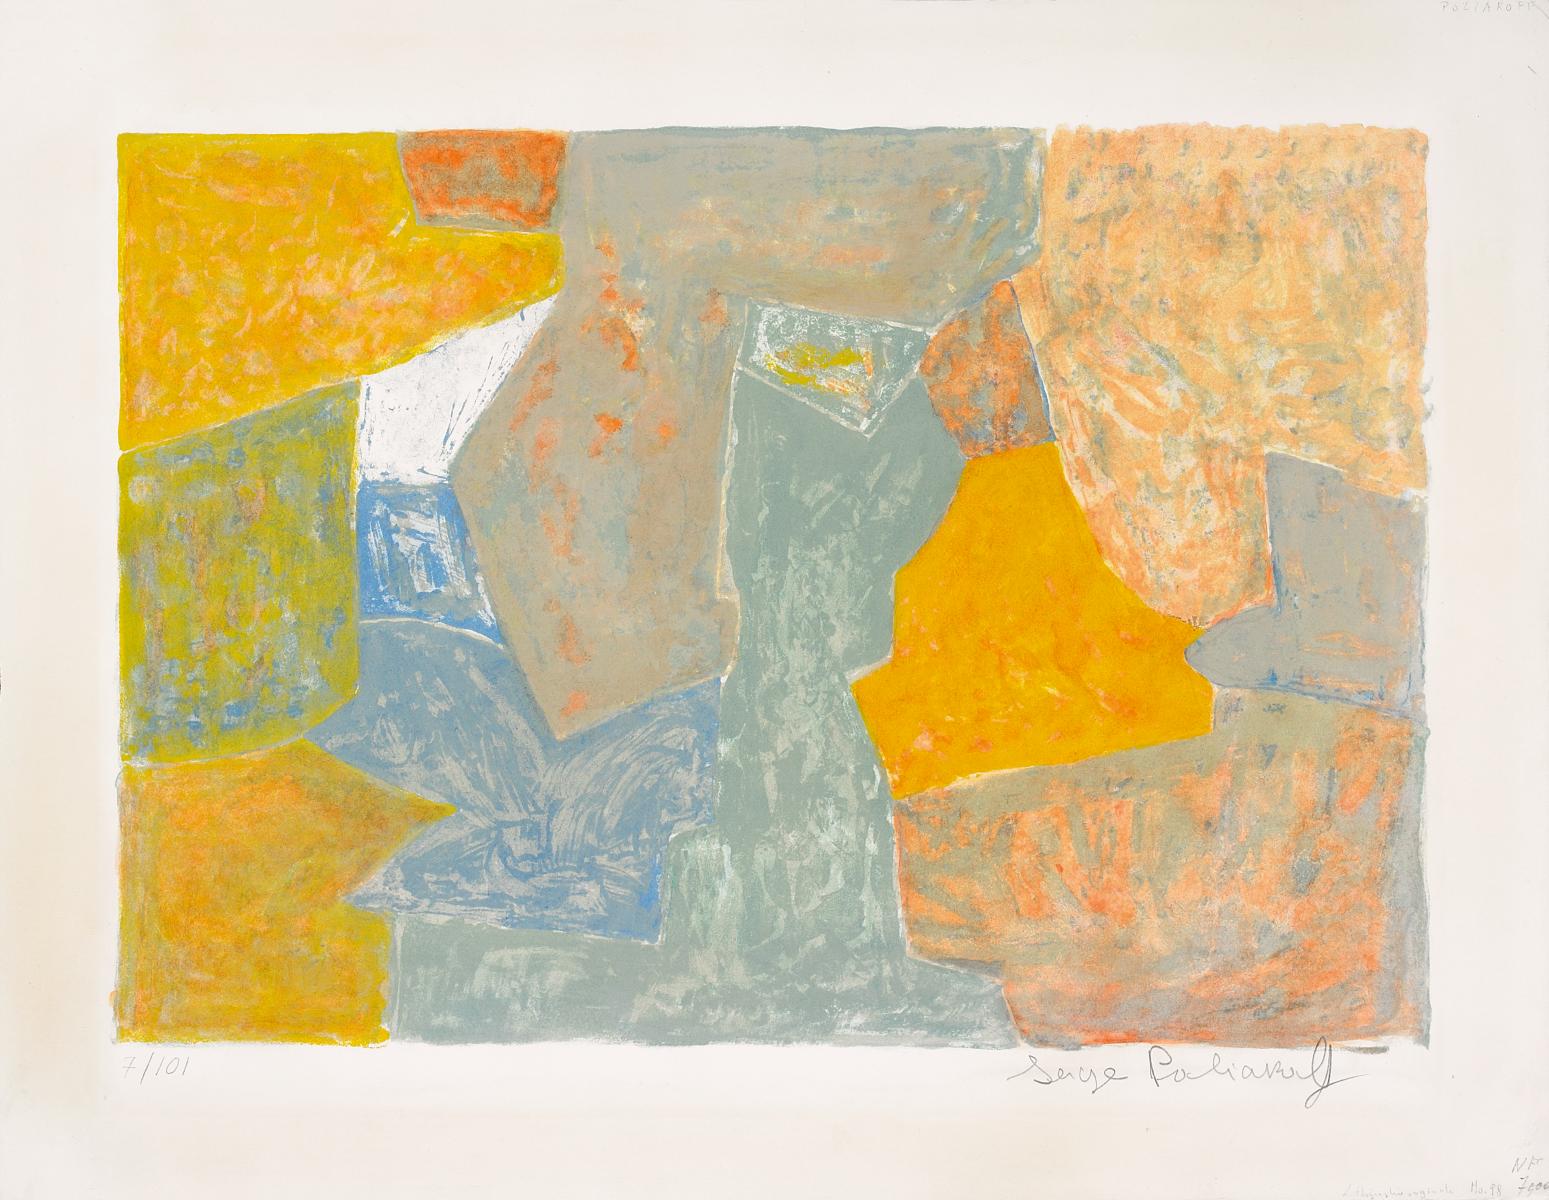 Serge Poliakoff - Composition jaune rouge et grise, 55703-5, Van Ham Kunstauktionen